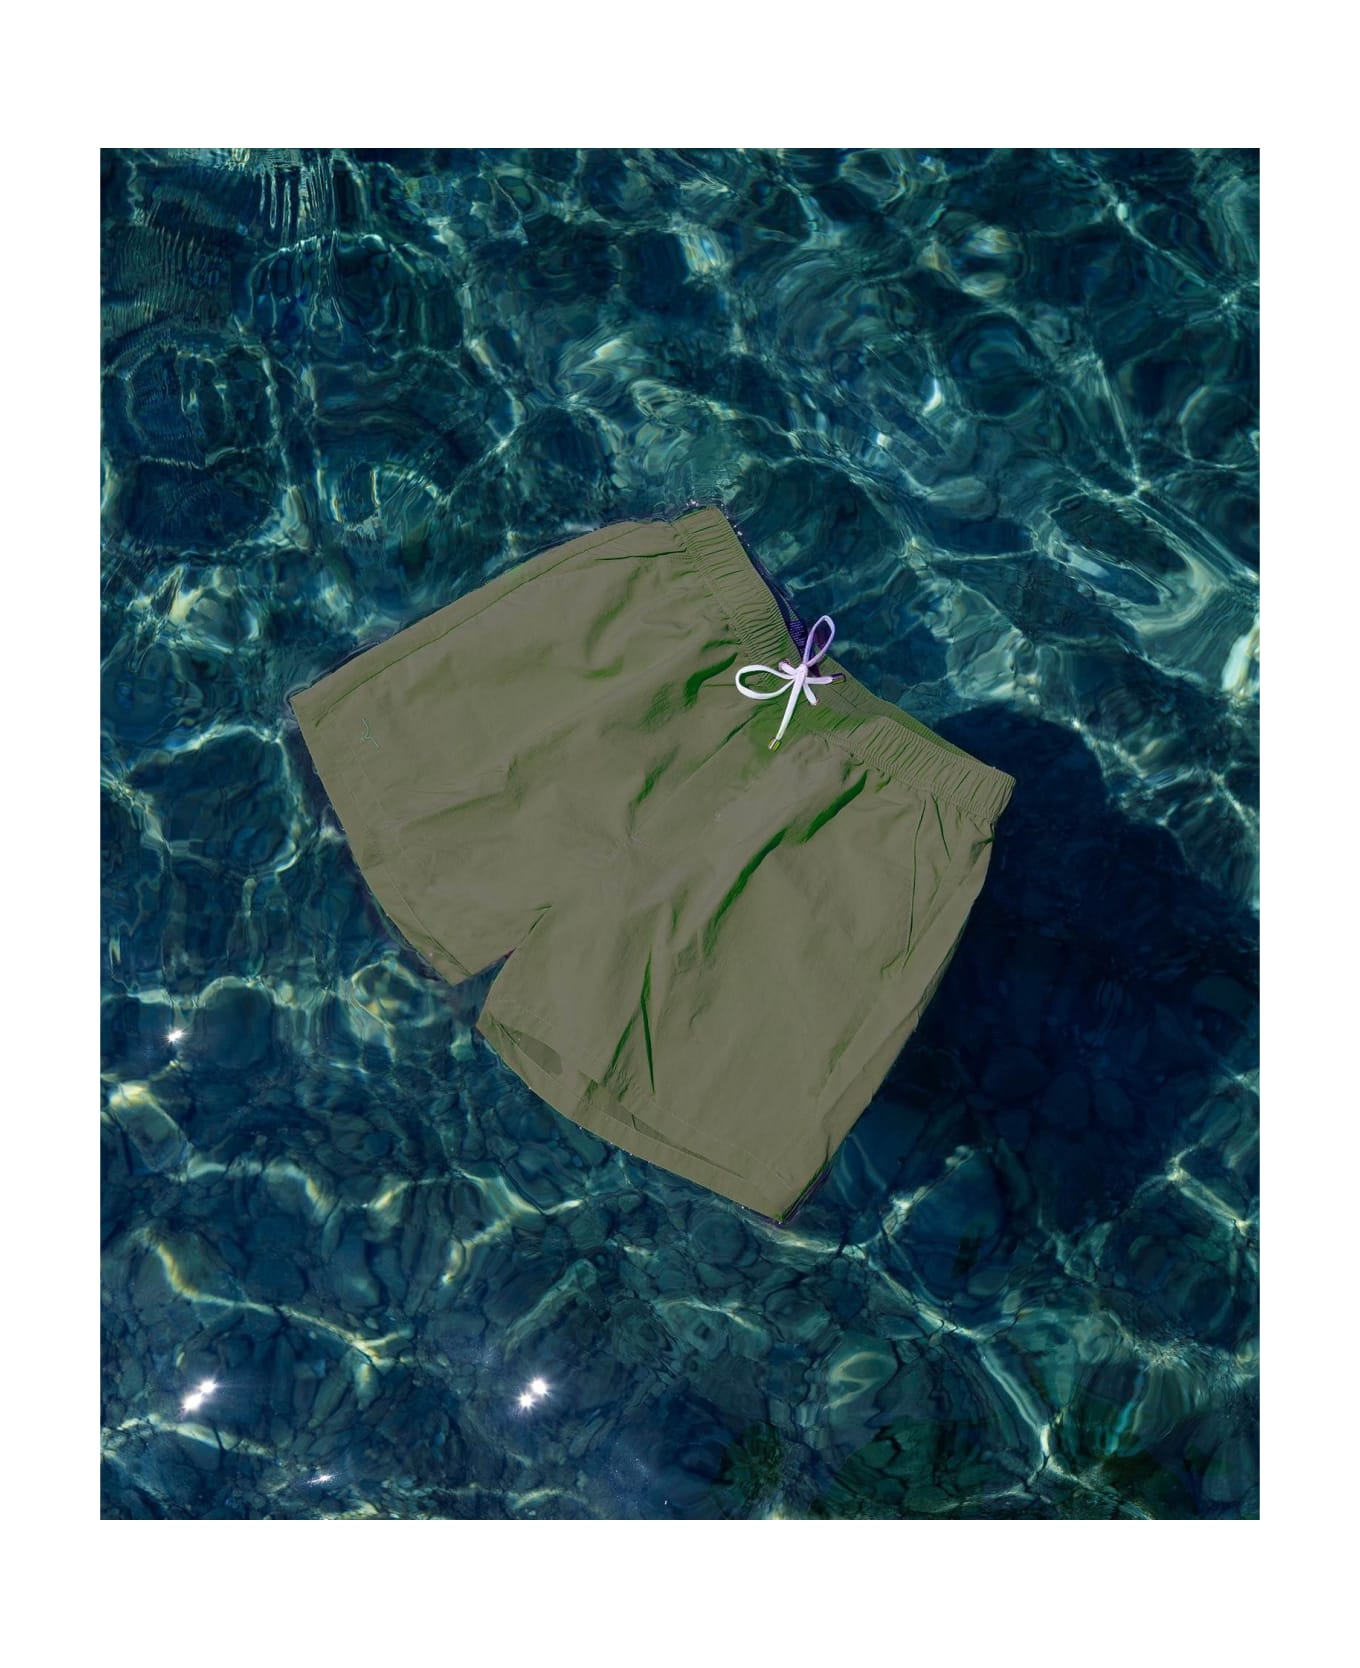 Larusmiani Swim Suit 'cala Di Volpe' Swimming Trunks - Olive